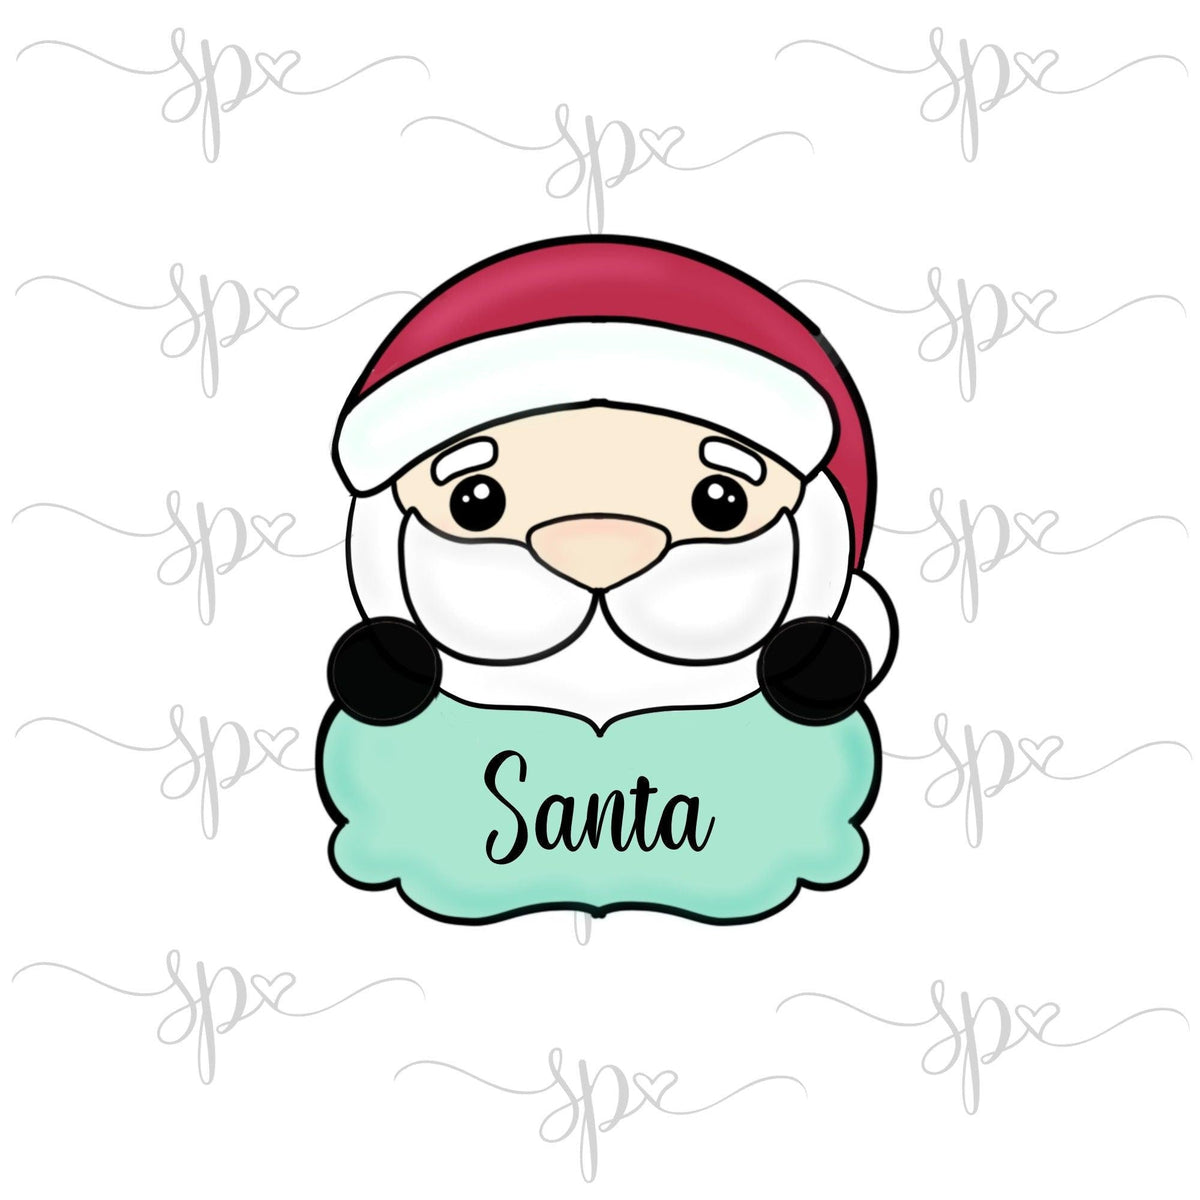 Santa Plaque 2019 Cookie Cutter - Sweetleigh 